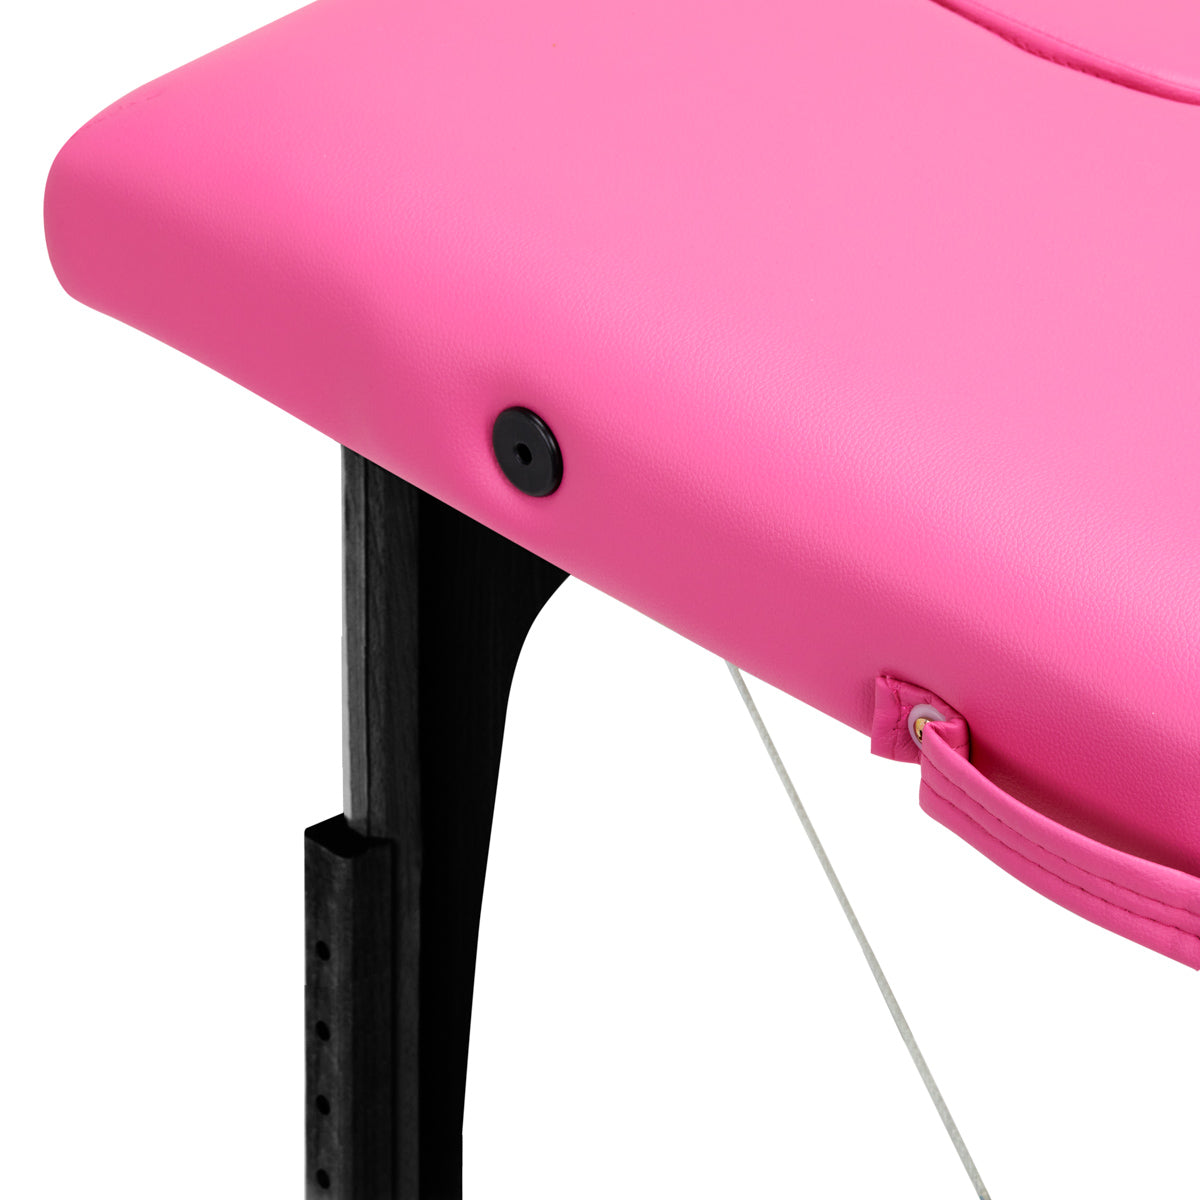 Folding massage table wooden Activ Fizjo comfort 2 segment pink black wood